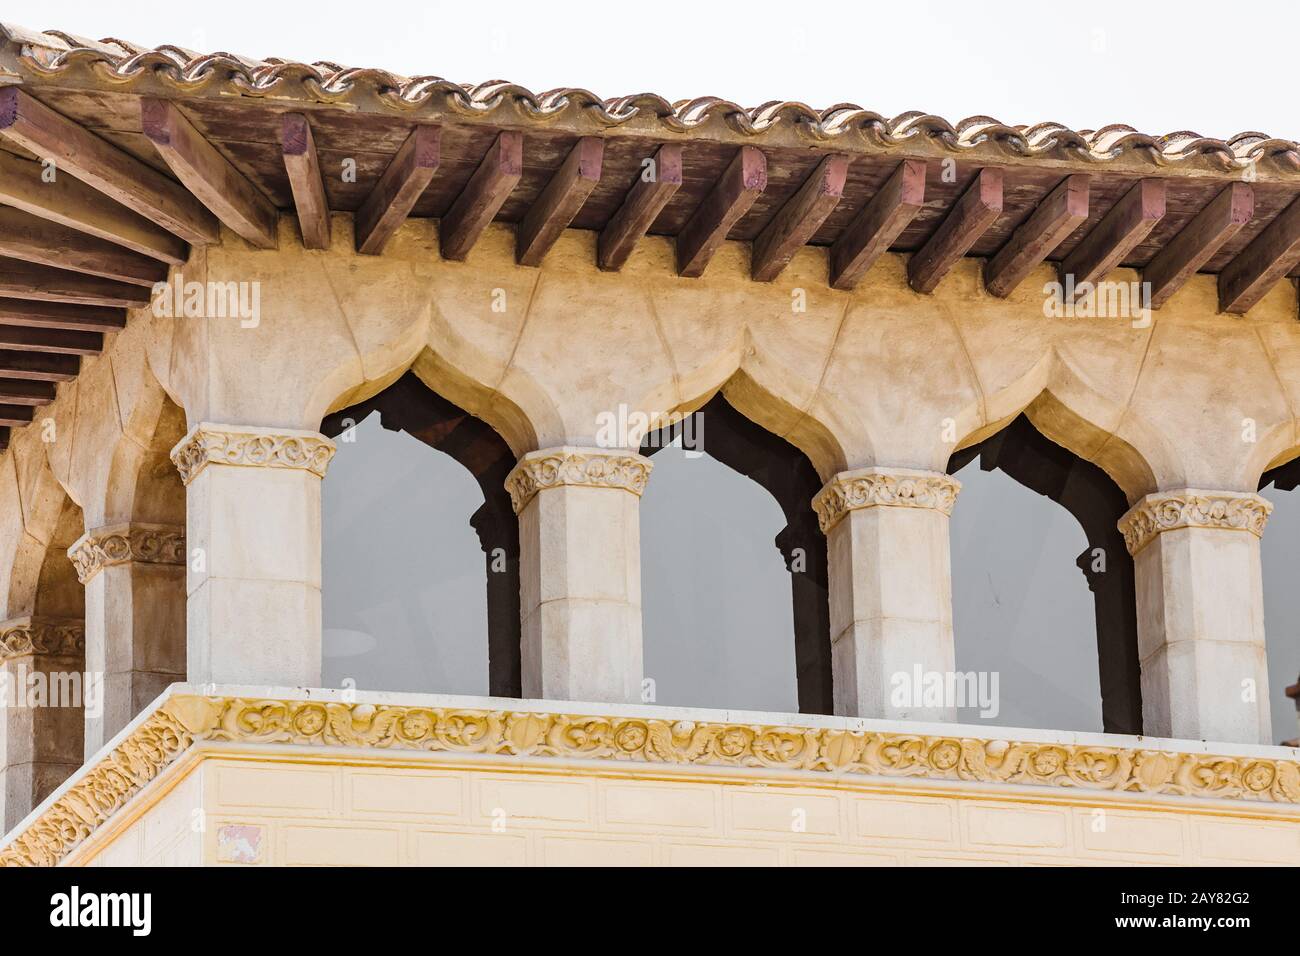 Traditional Moorish architecture in Spain Stock Photo